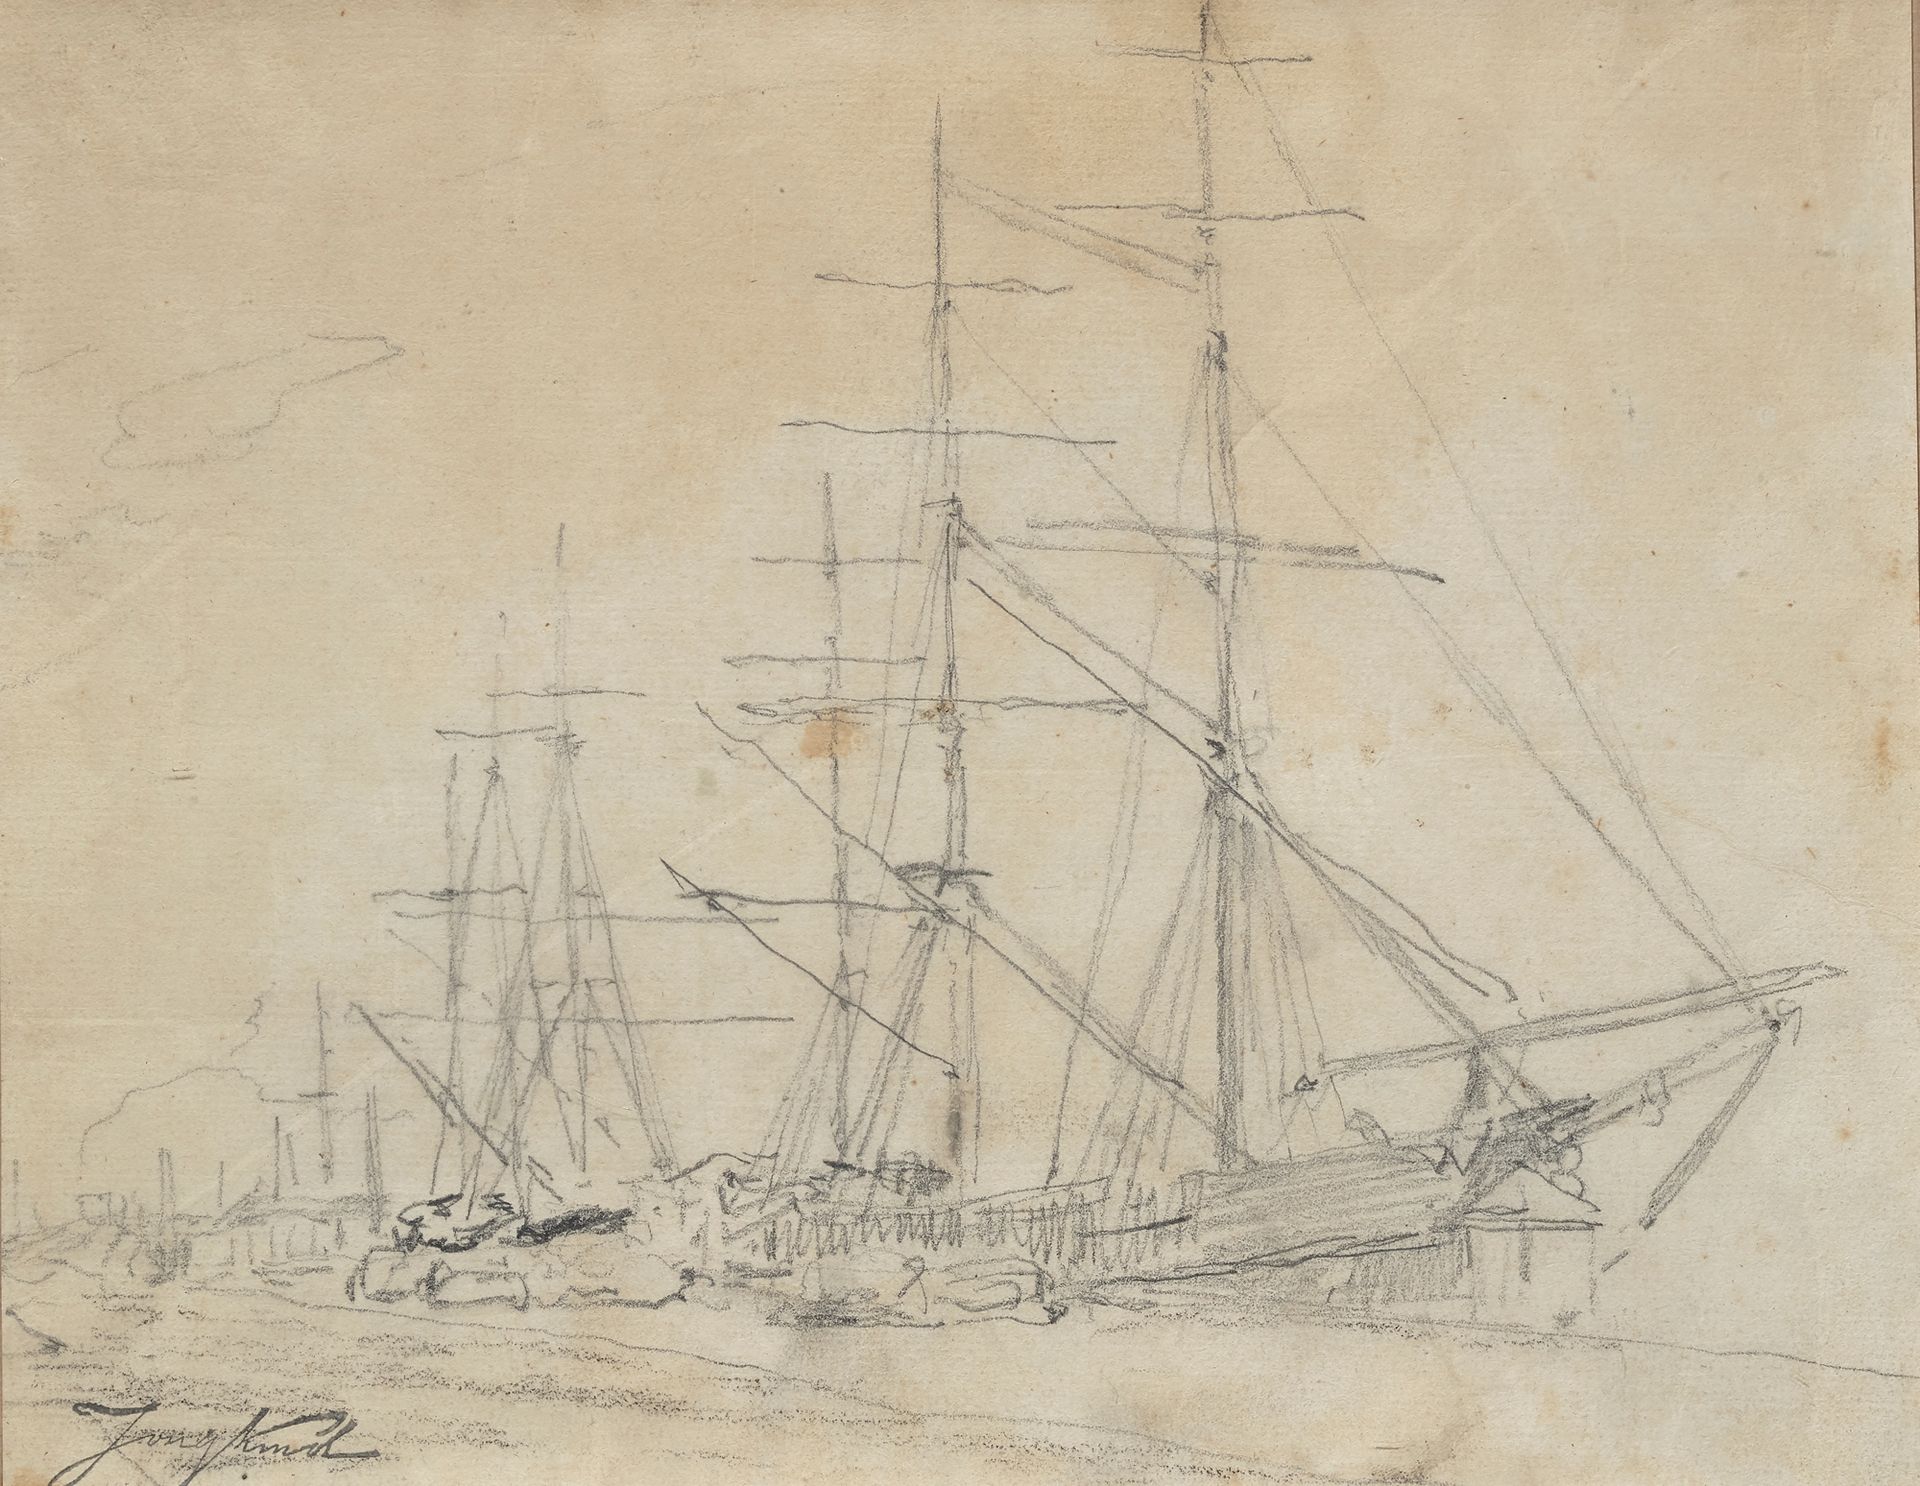 Johan-Barthold JONGKIND (1819-1891) 
Barco de vela
Lápiz
20 x 26 cm (a la vista)